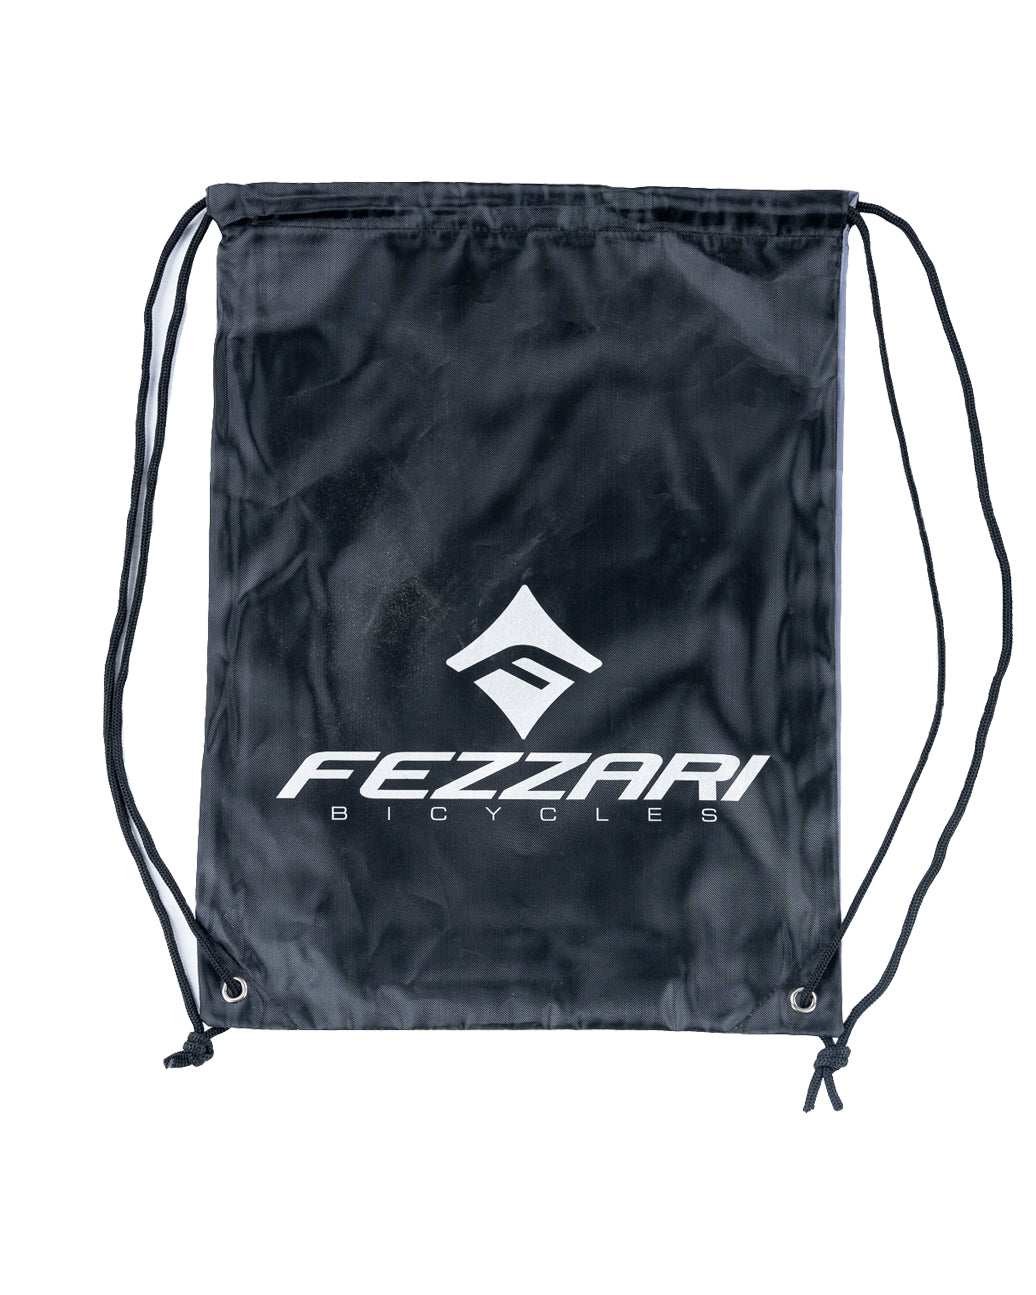 Fezzari Drawstring Bag